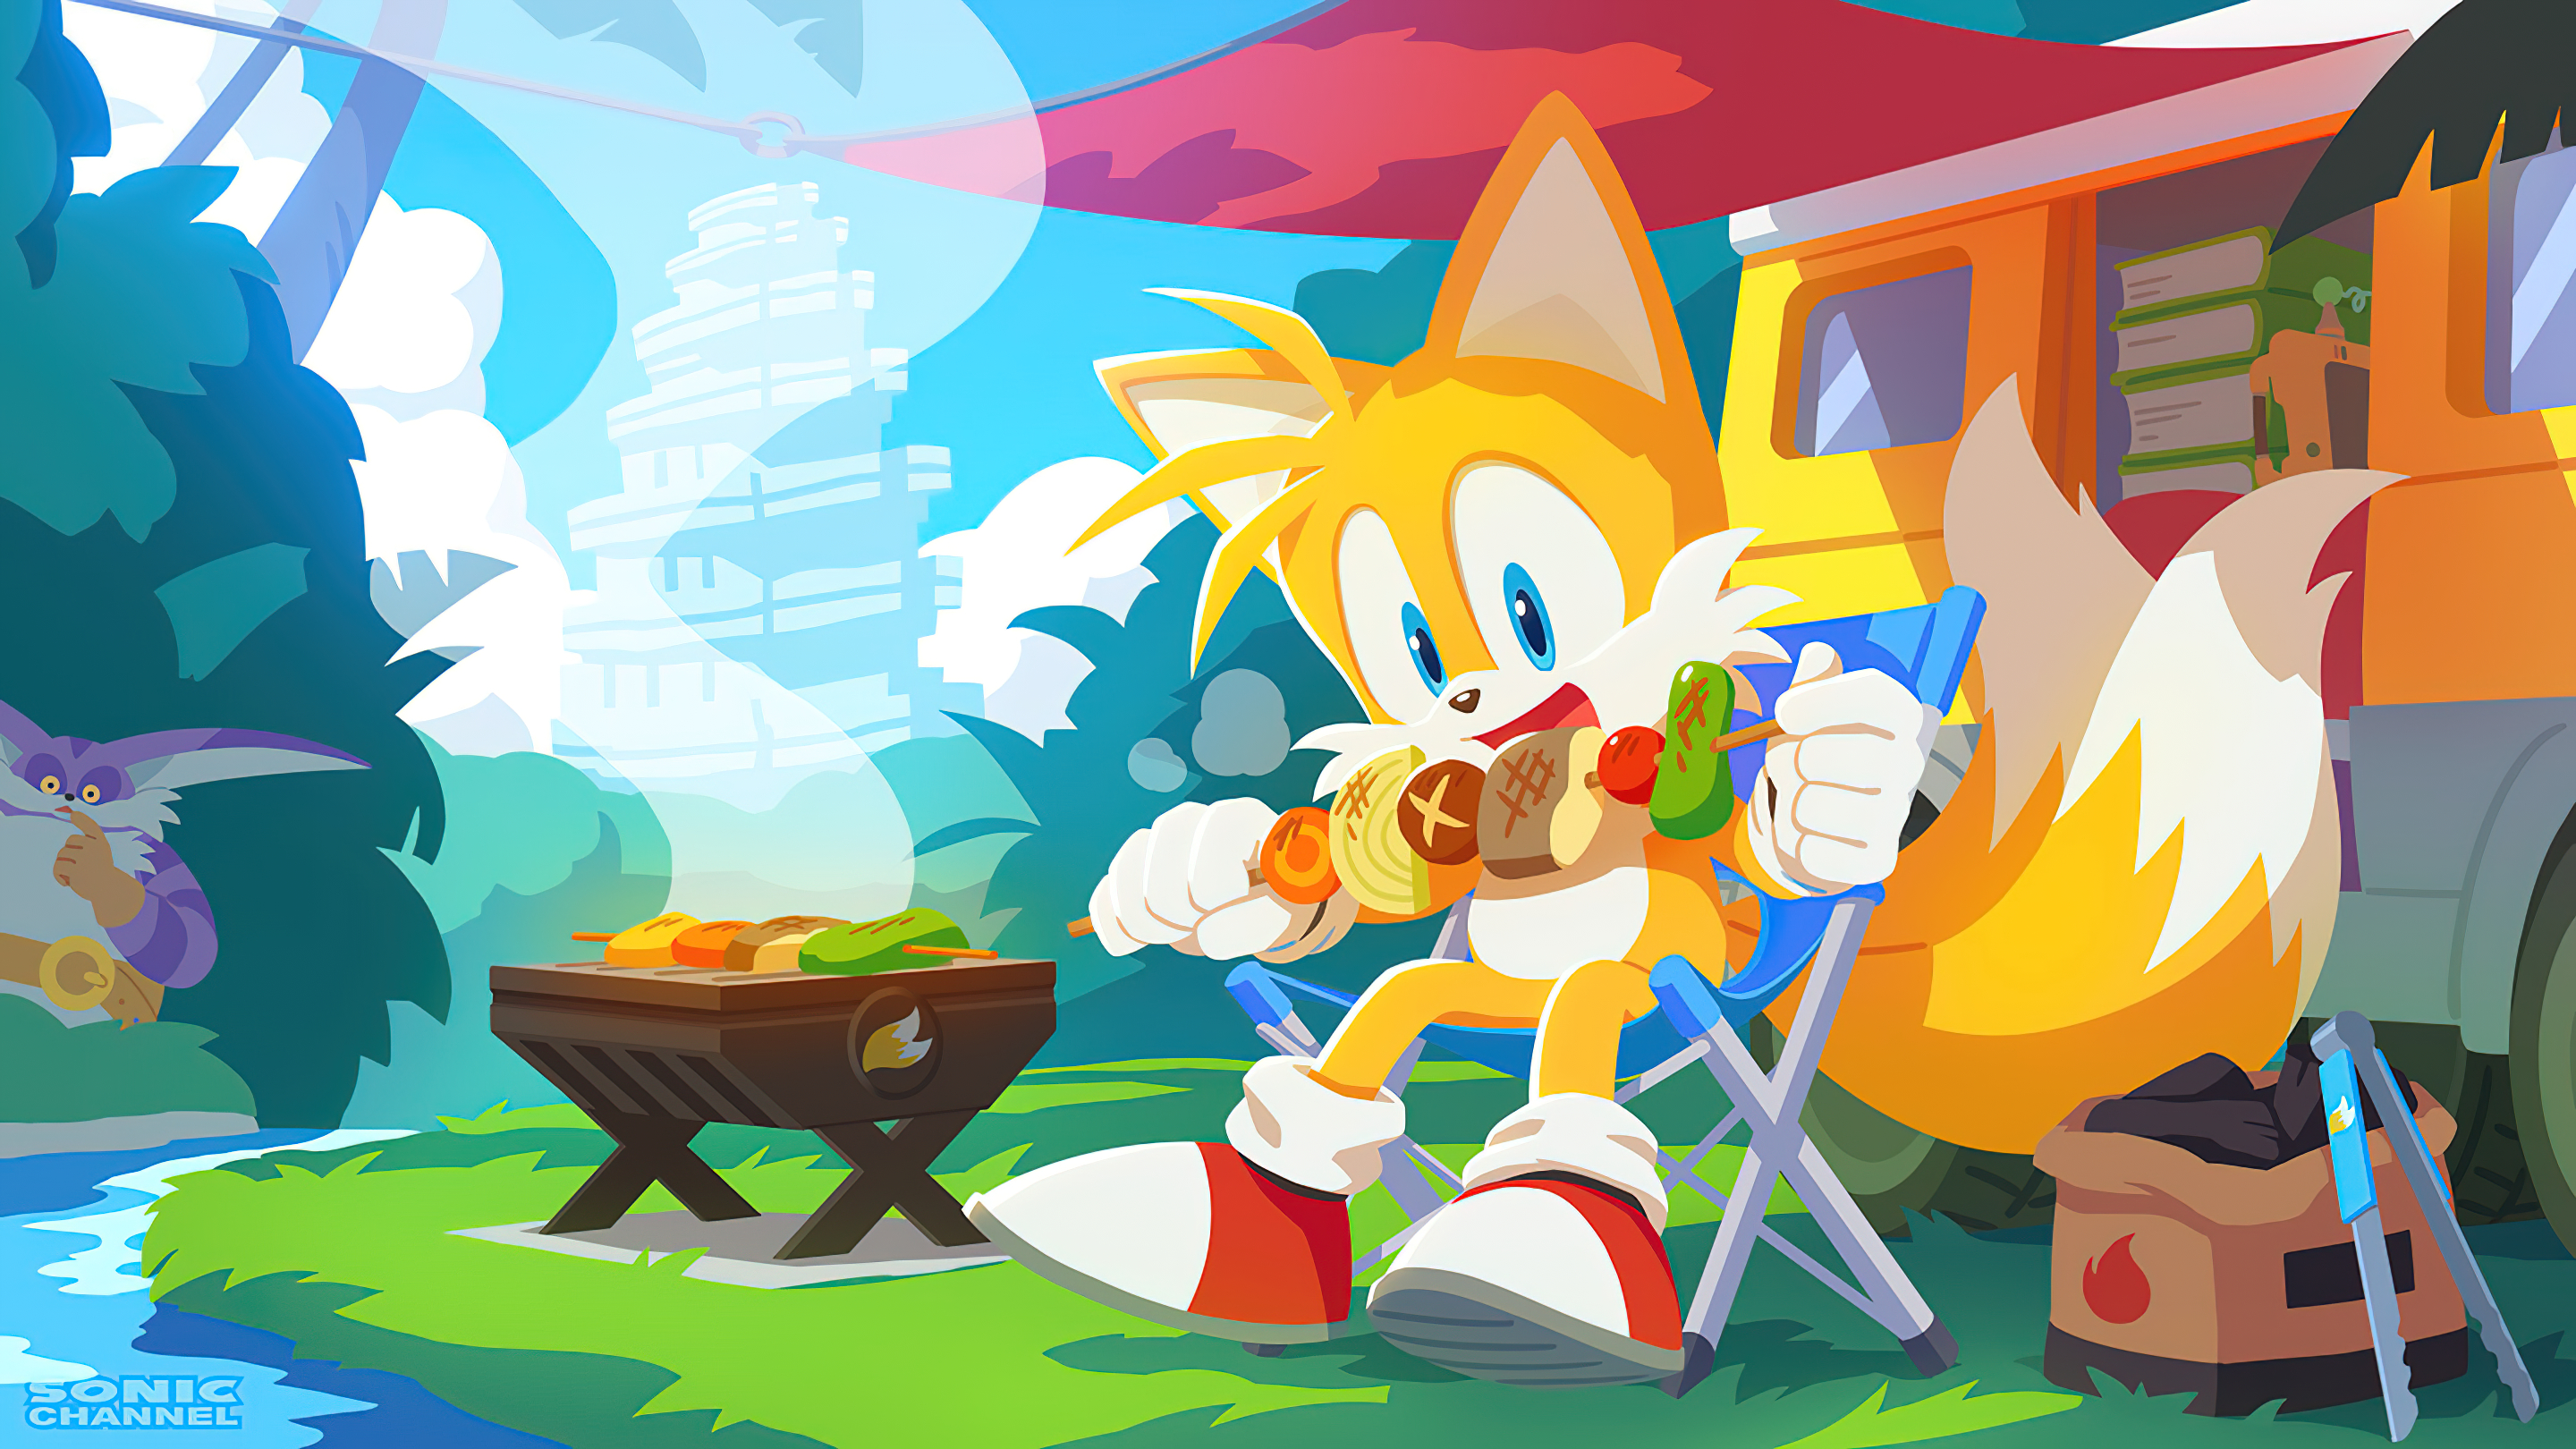 Tails Character Yui Karasuno Fox Sega Video Game Art Comic Art Sonic The Hedgehog Sonic Barbecue Bar 2880x1620